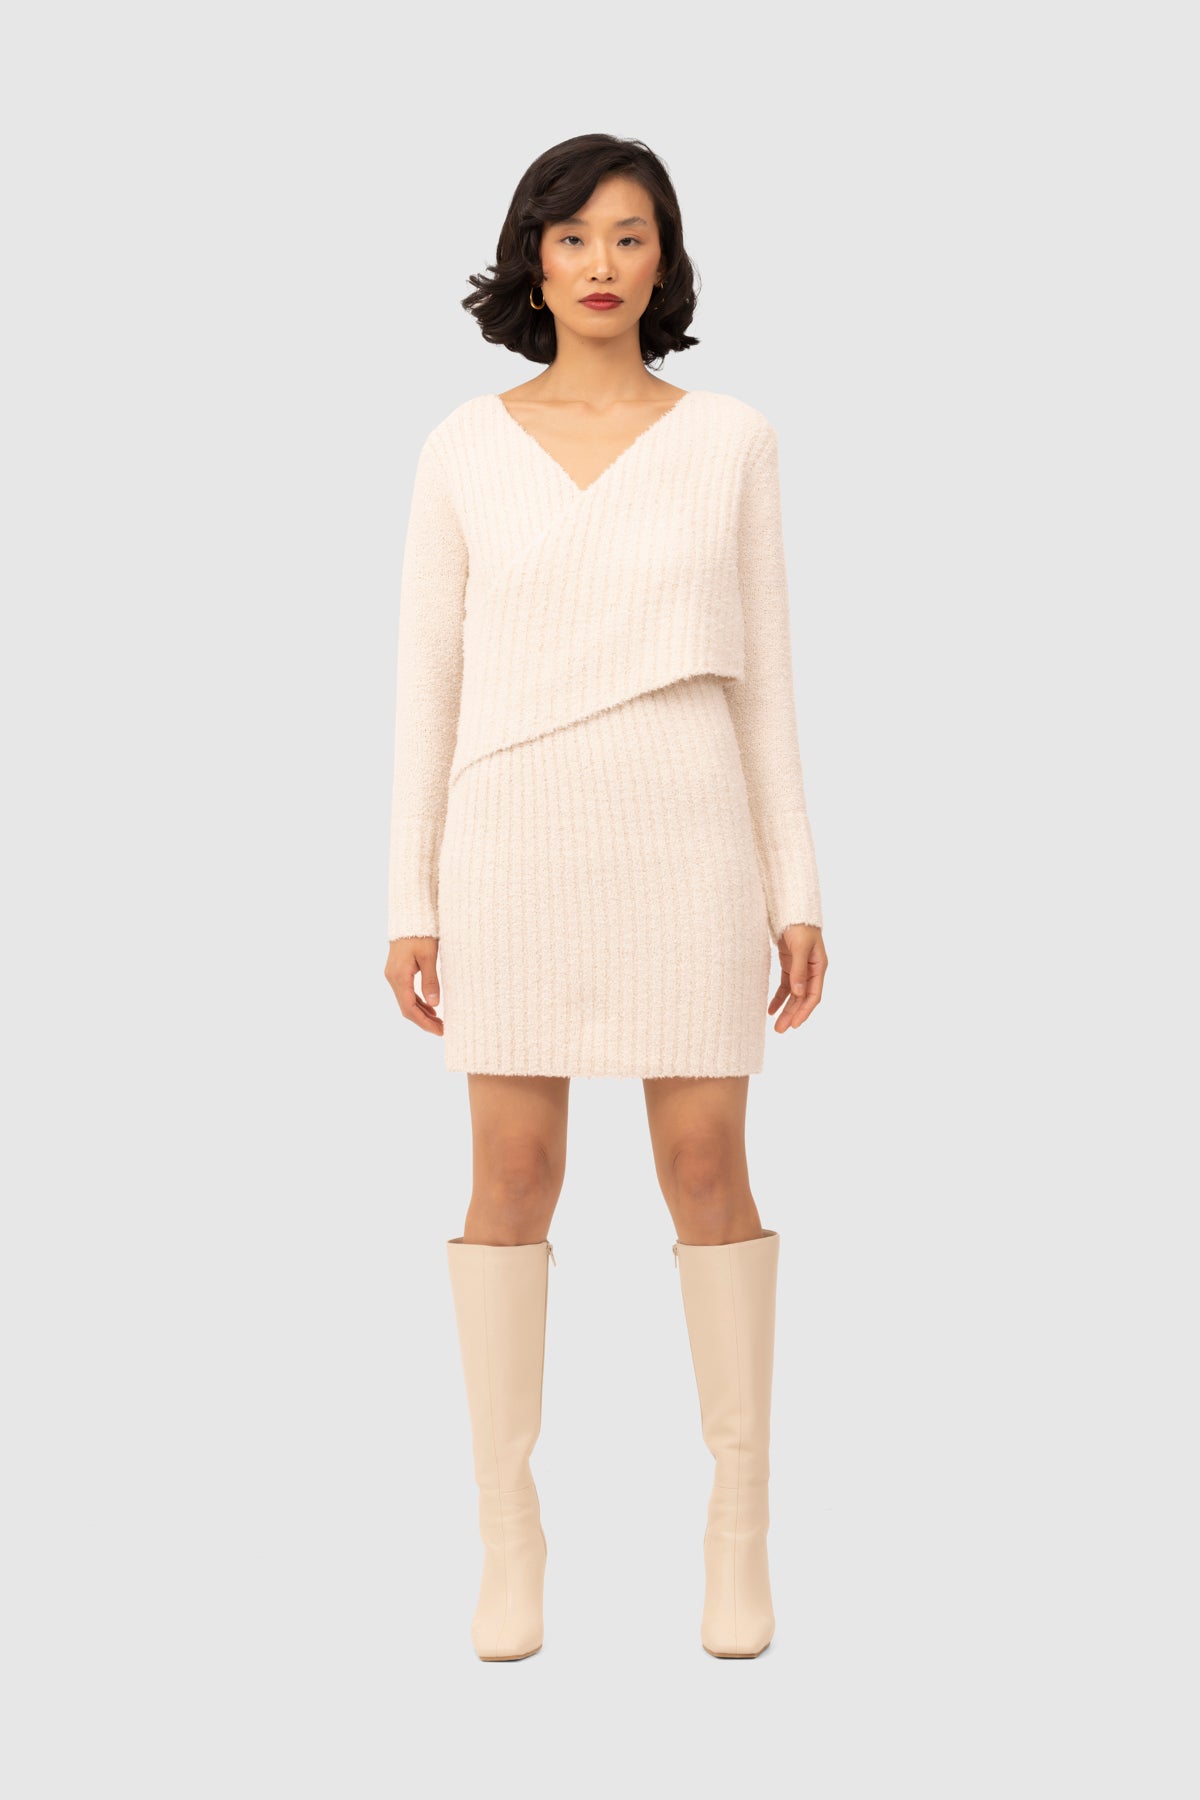 C/MEO Collective - Longevity Knit Dress - Ivory